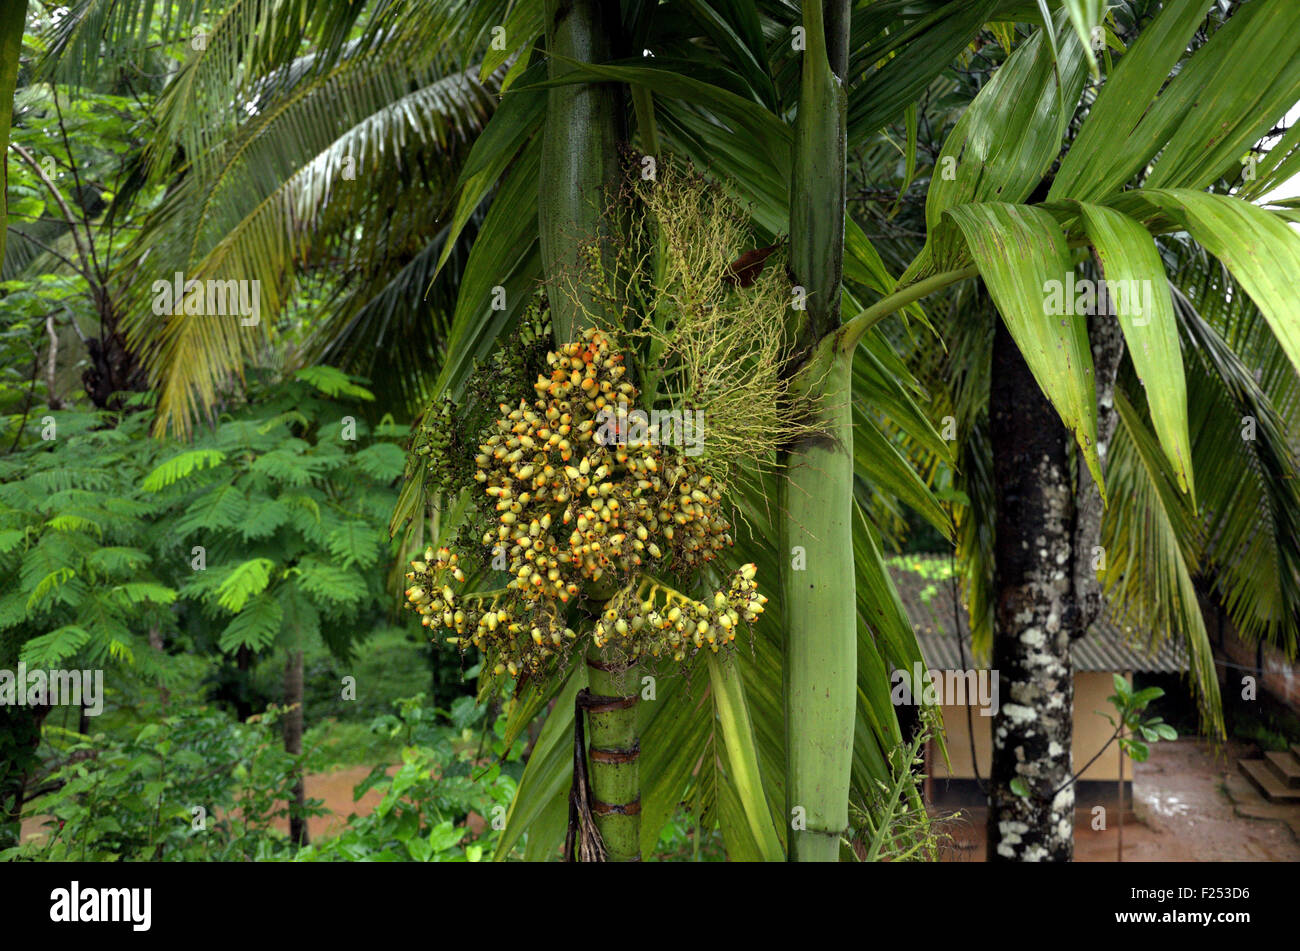 Areca Nut (Supari) palm with bunch of areca nuts Stock Photo